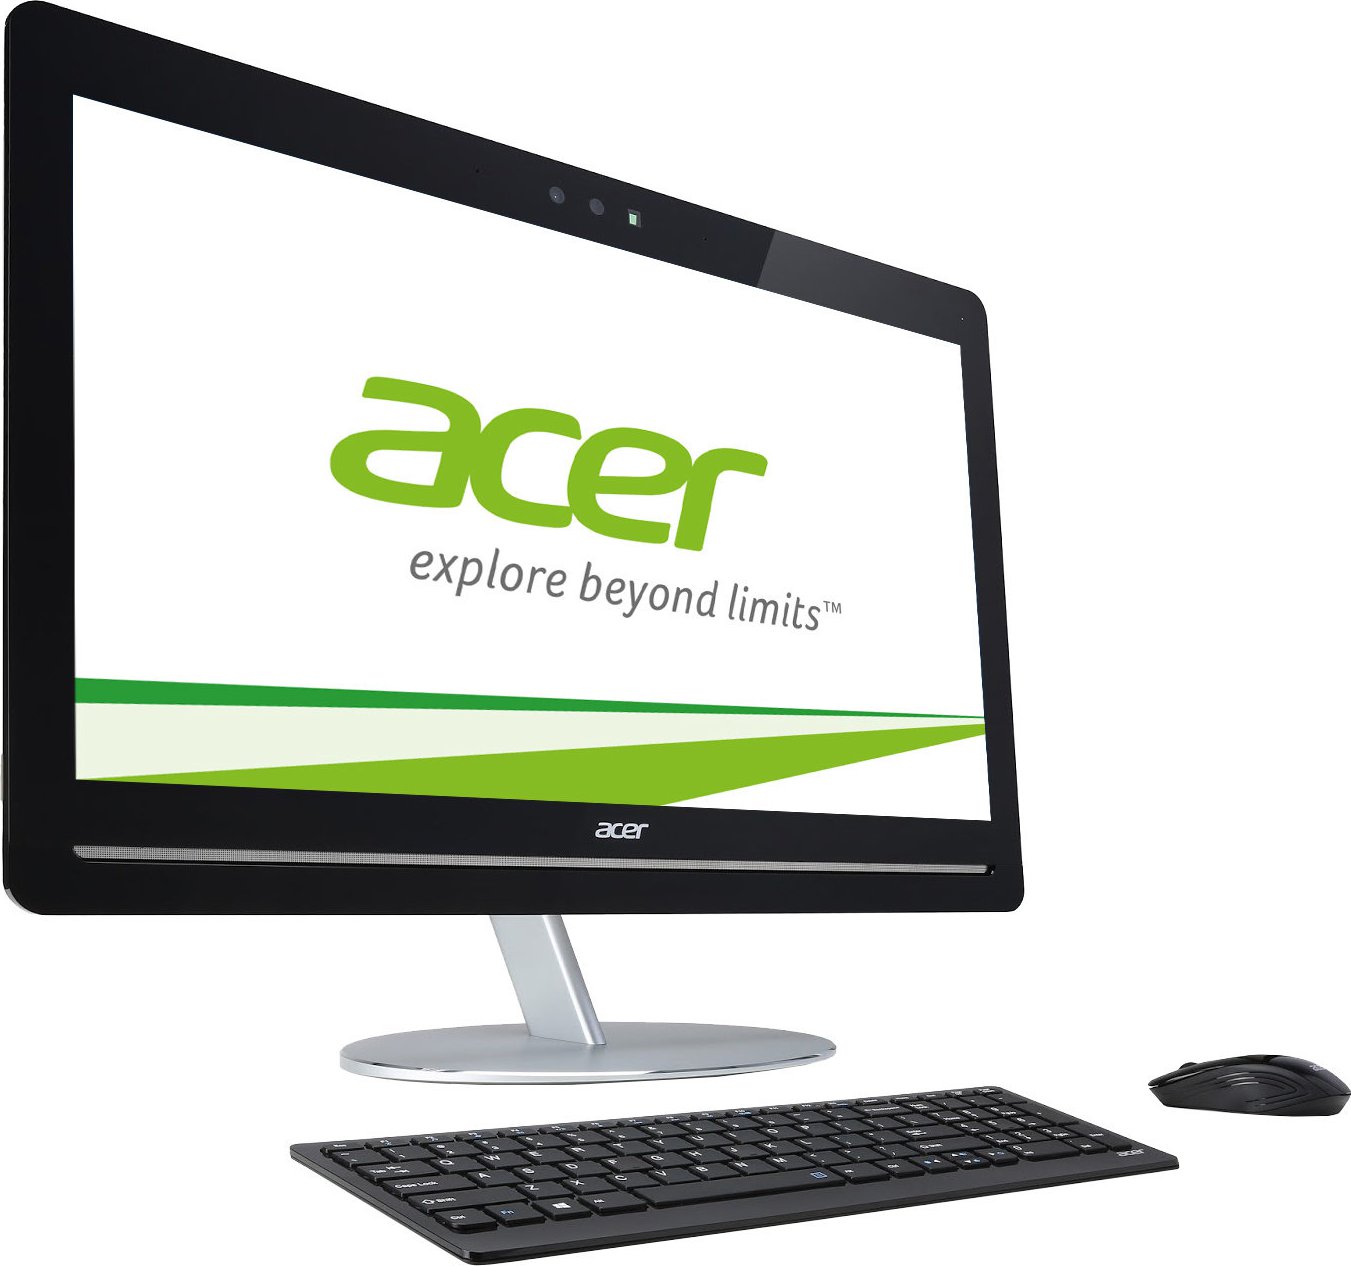 Сервисный центр acer undefined. Моноблок Acer vez2740g. Acer z5710 RF TV. Матрица моноблока Acer. Моноблок Acer экранное меню.